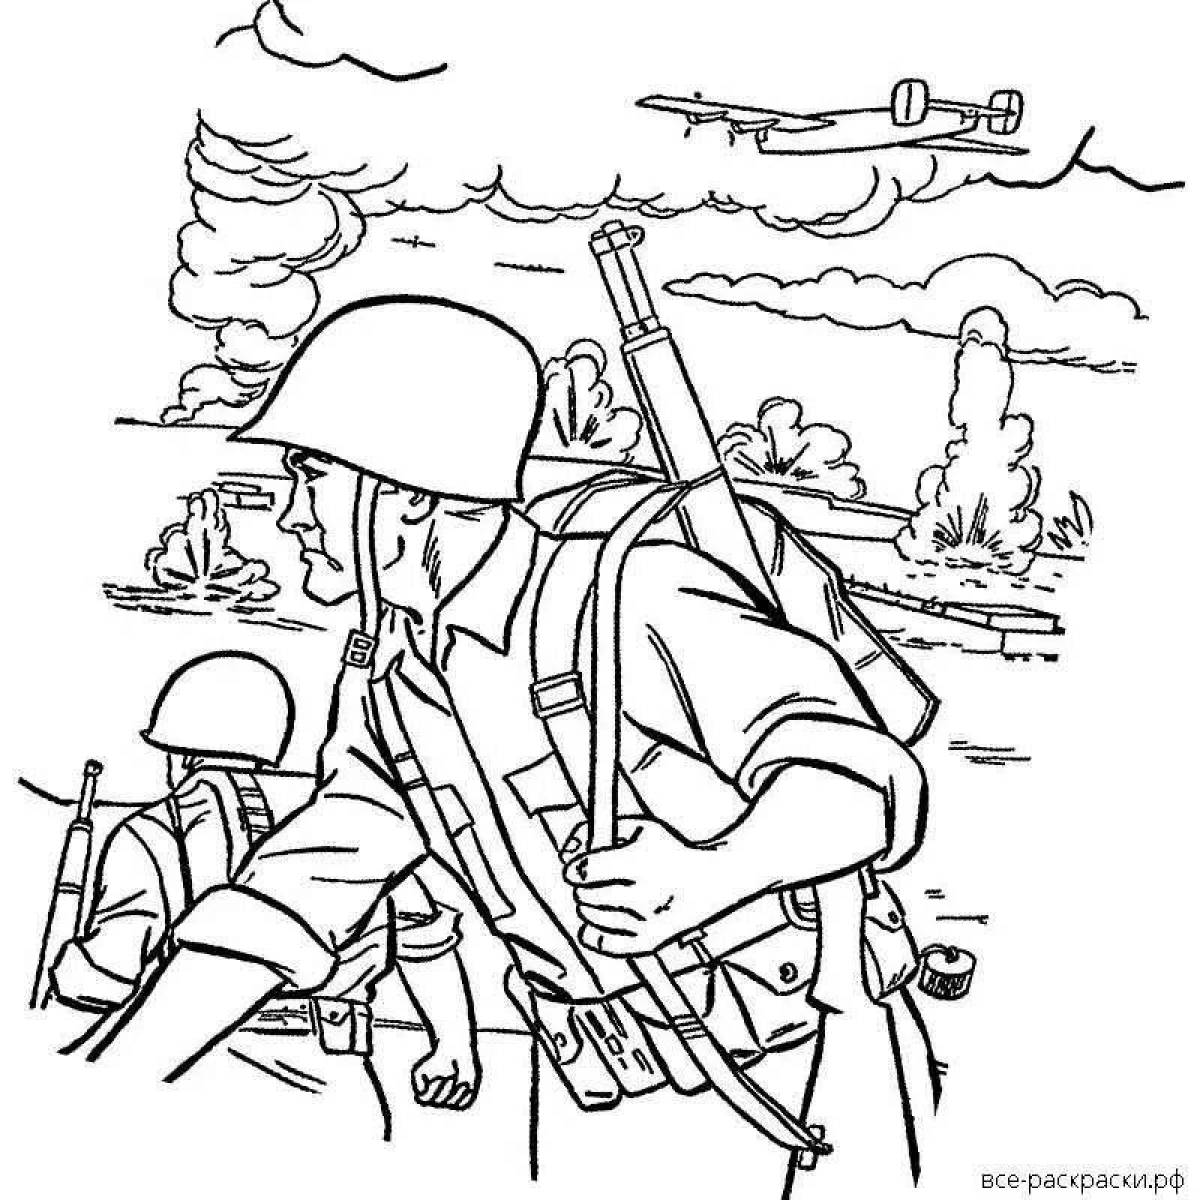 Joyful coloring war 1941-1945